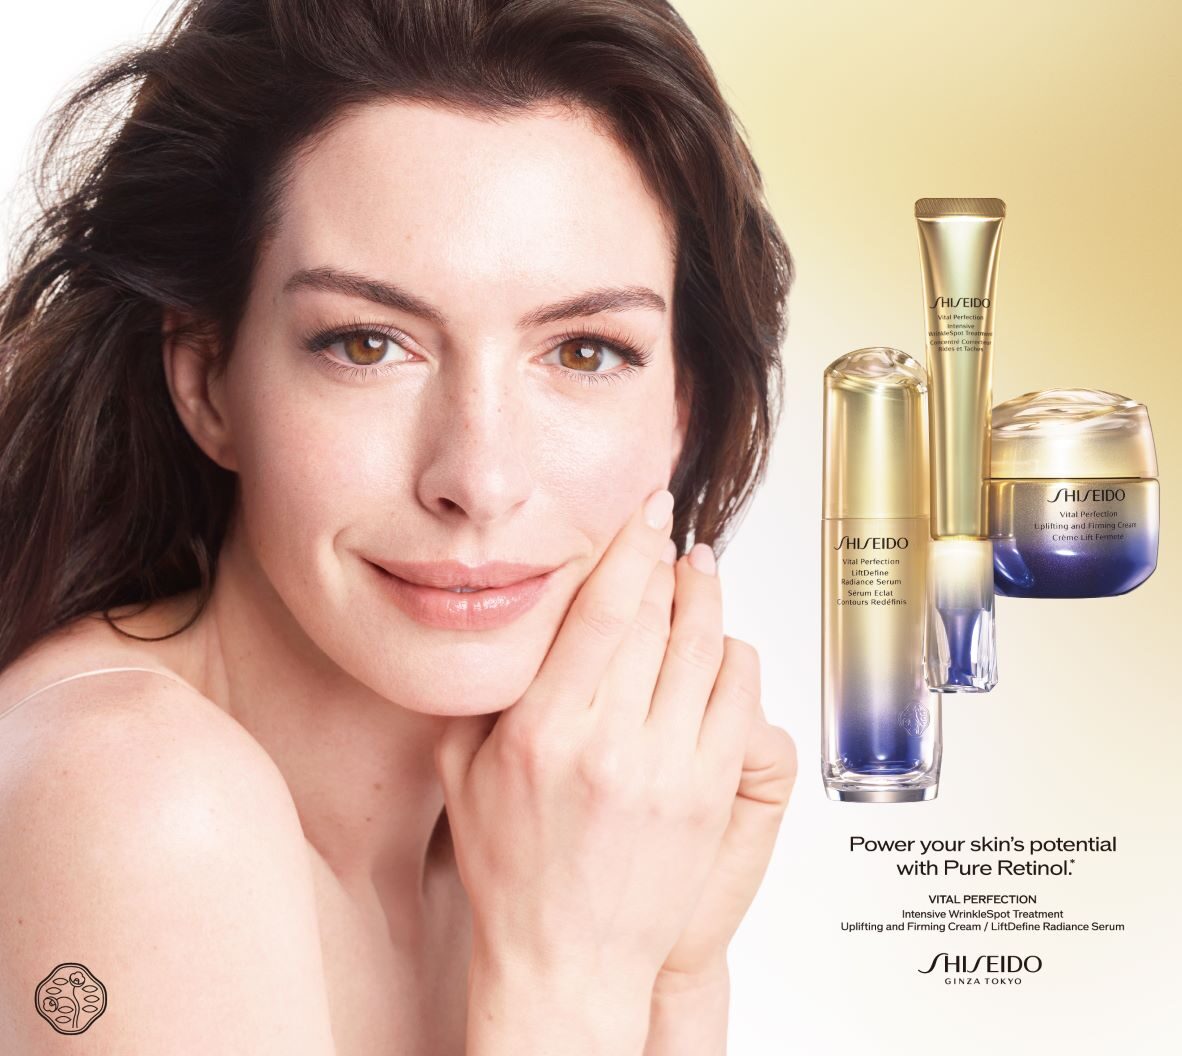 Shiseido Vital Perfection Line Anne Hathaway e1694572554366